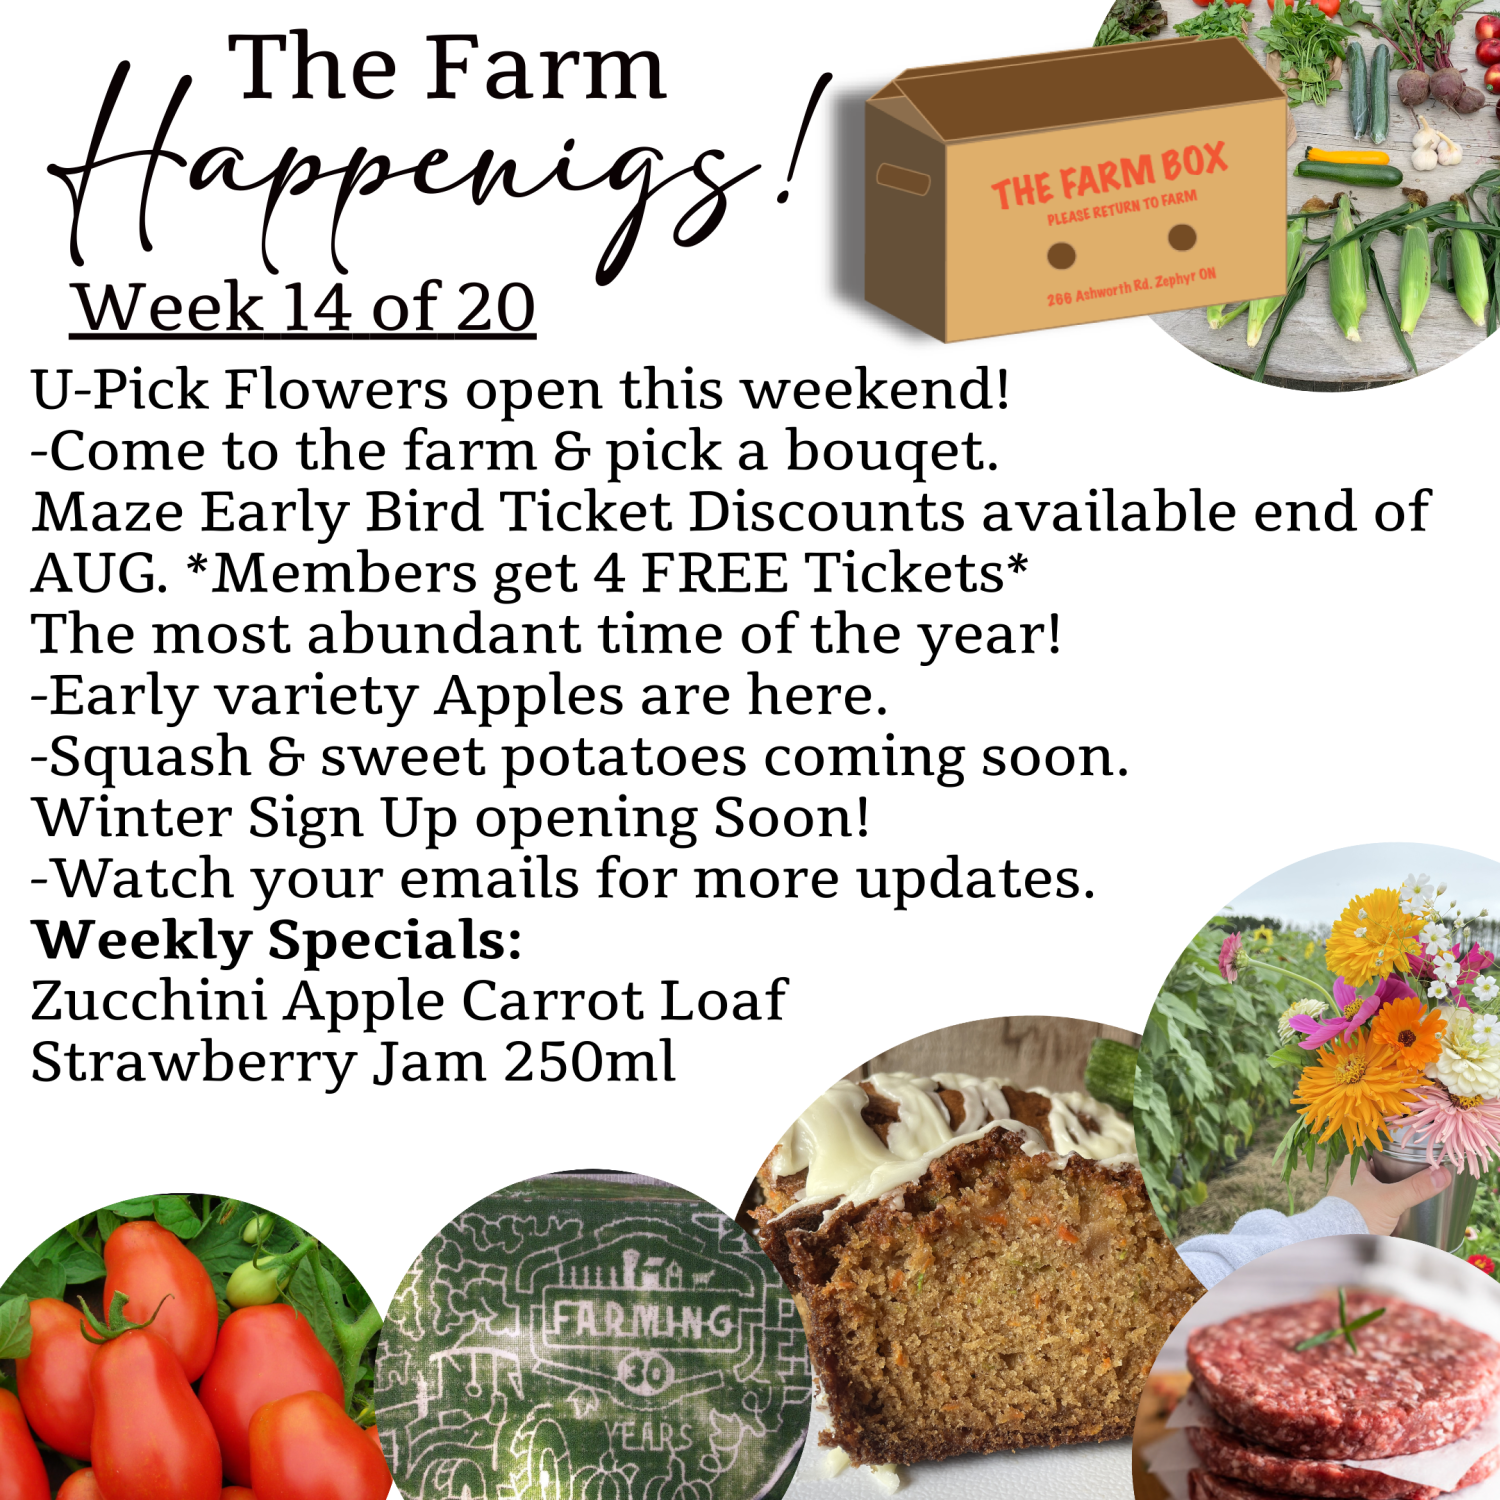 Previous Happening: "The Farm Box"-Coopers CSA Farm Farm Happenings Week 14